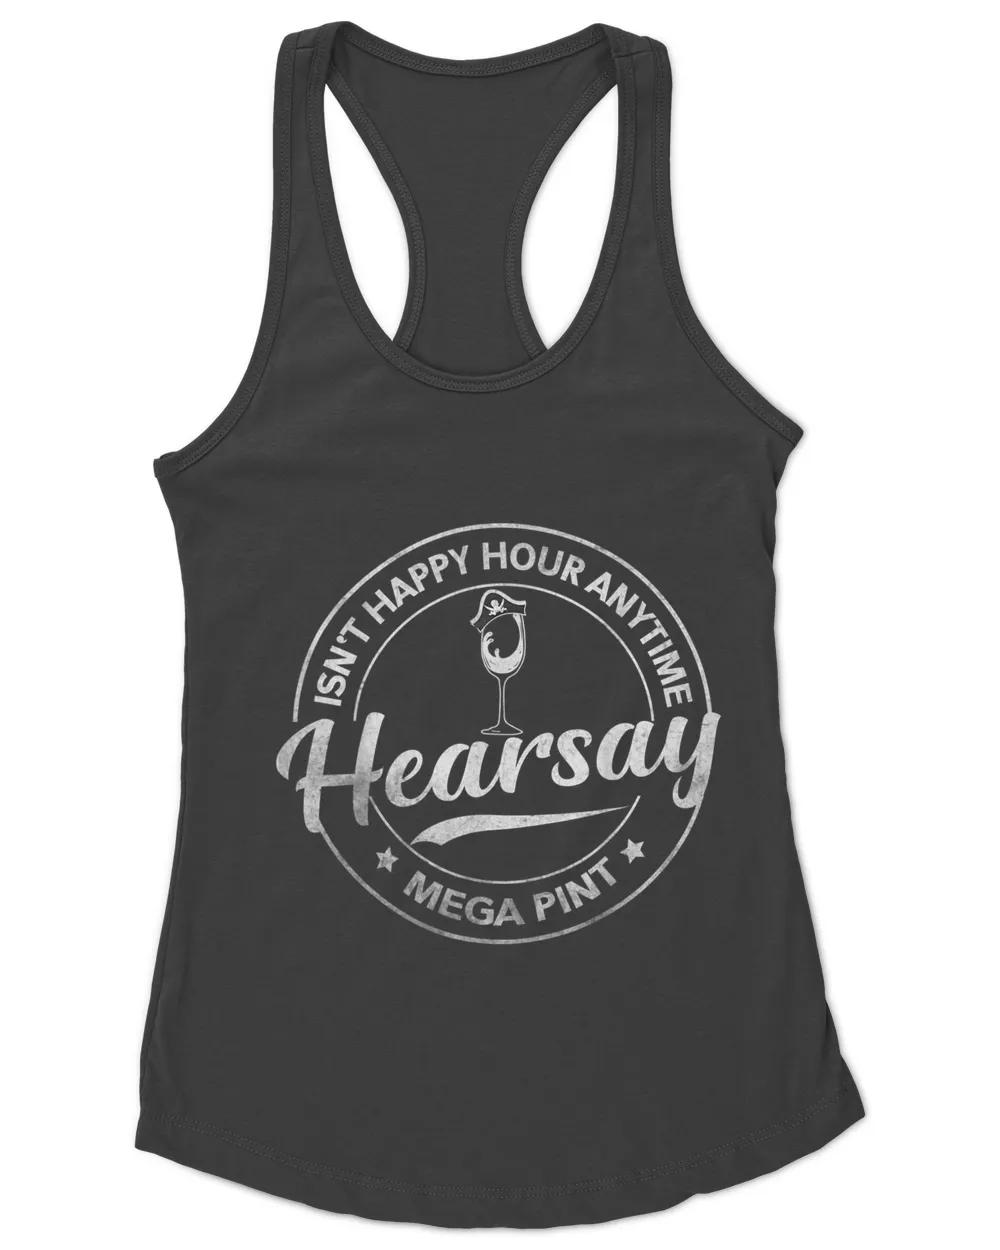 Hearsay Brewing Isn't Happy Hour Anytime Mega Pint